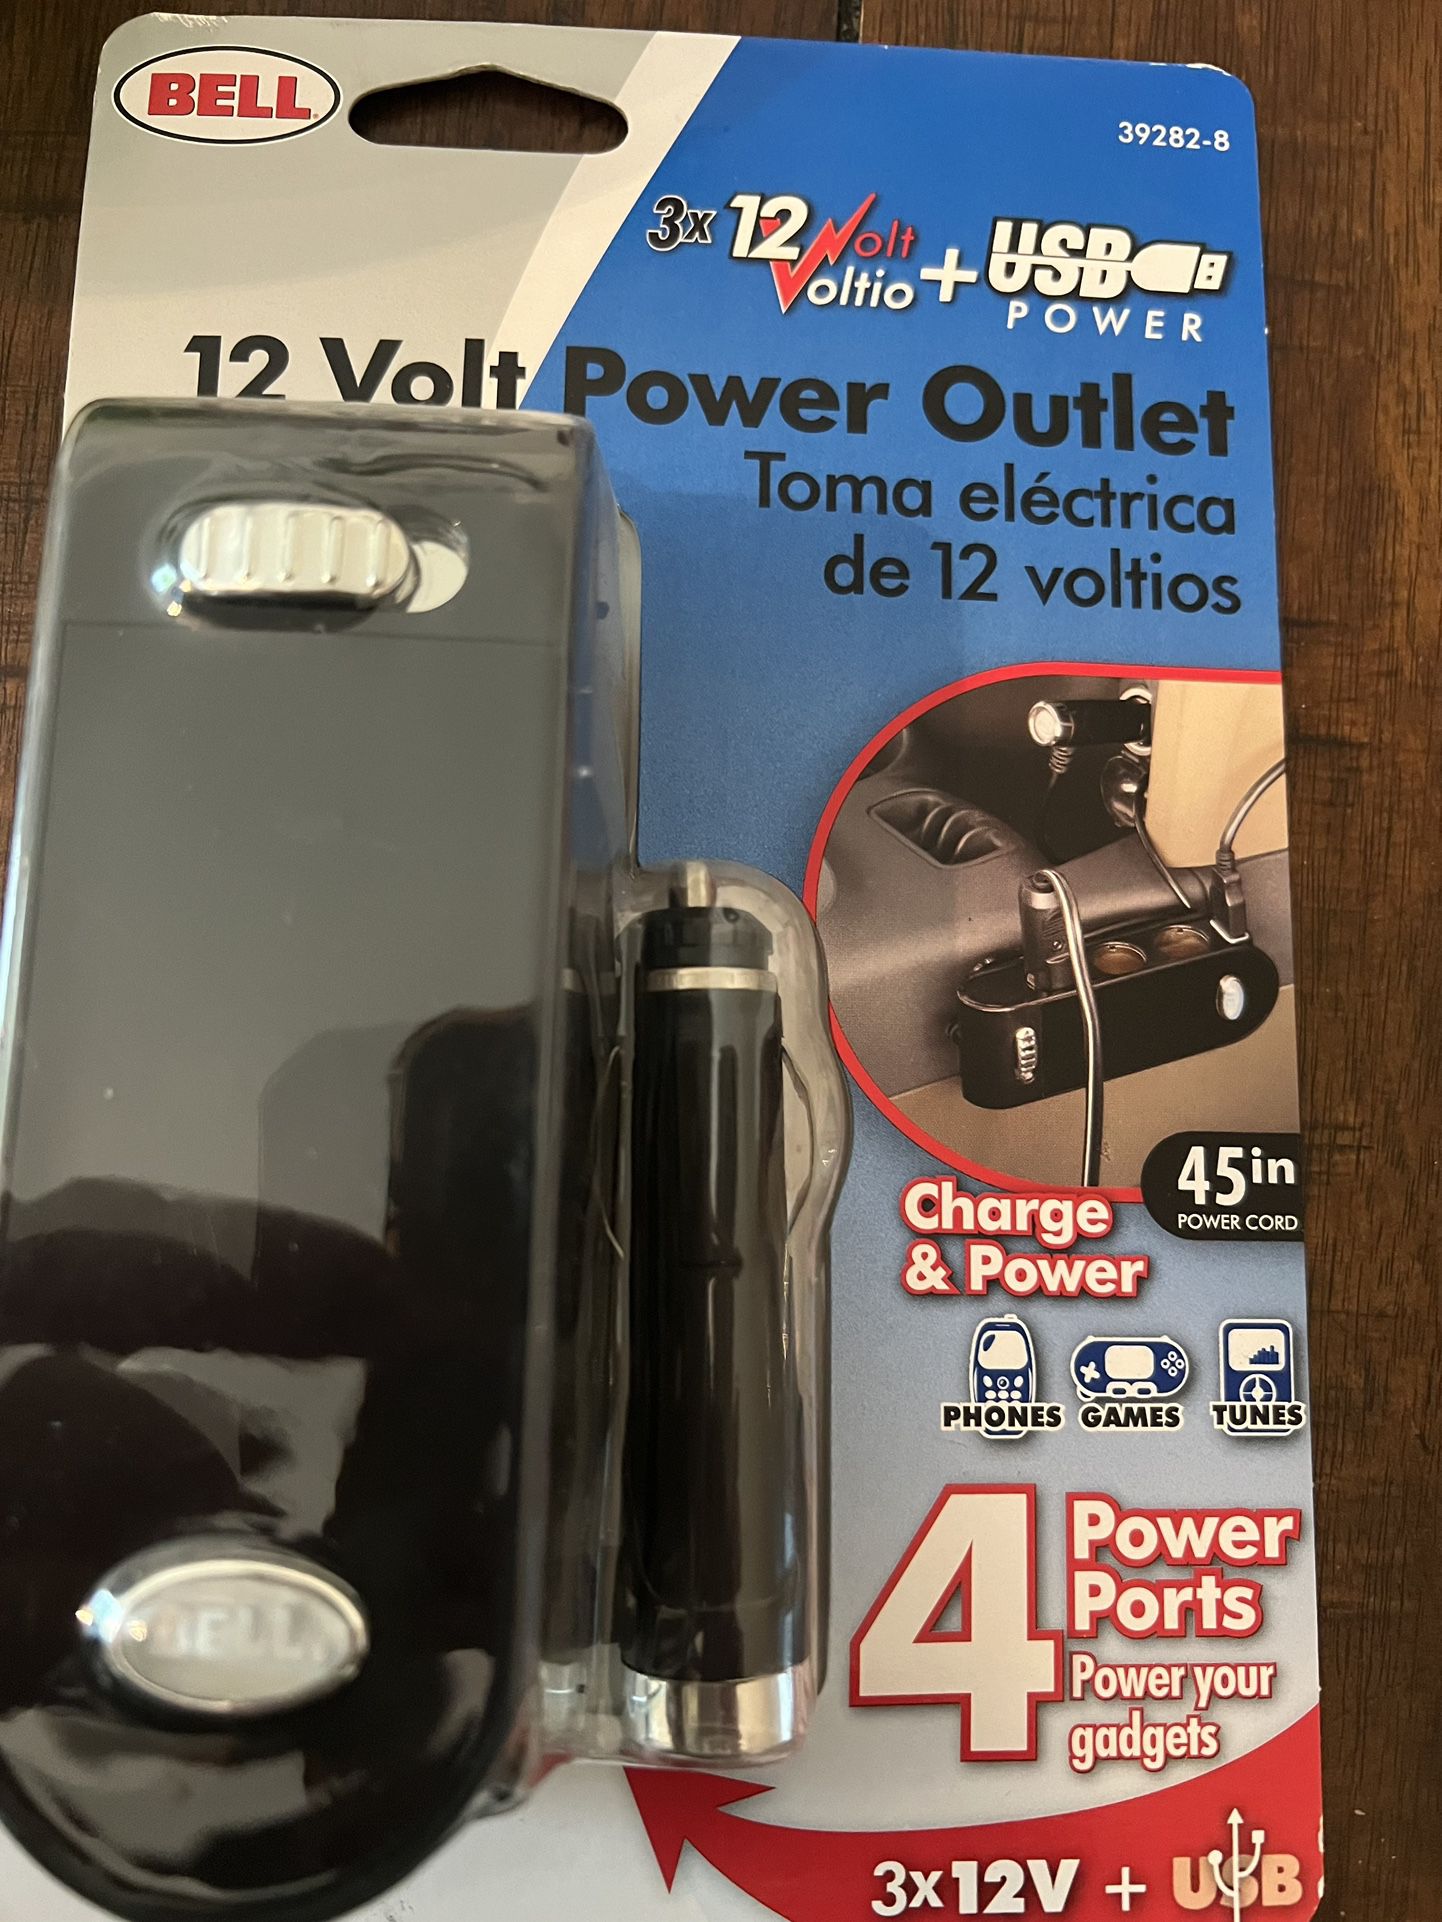 12 Volt Power Outlet +USB 